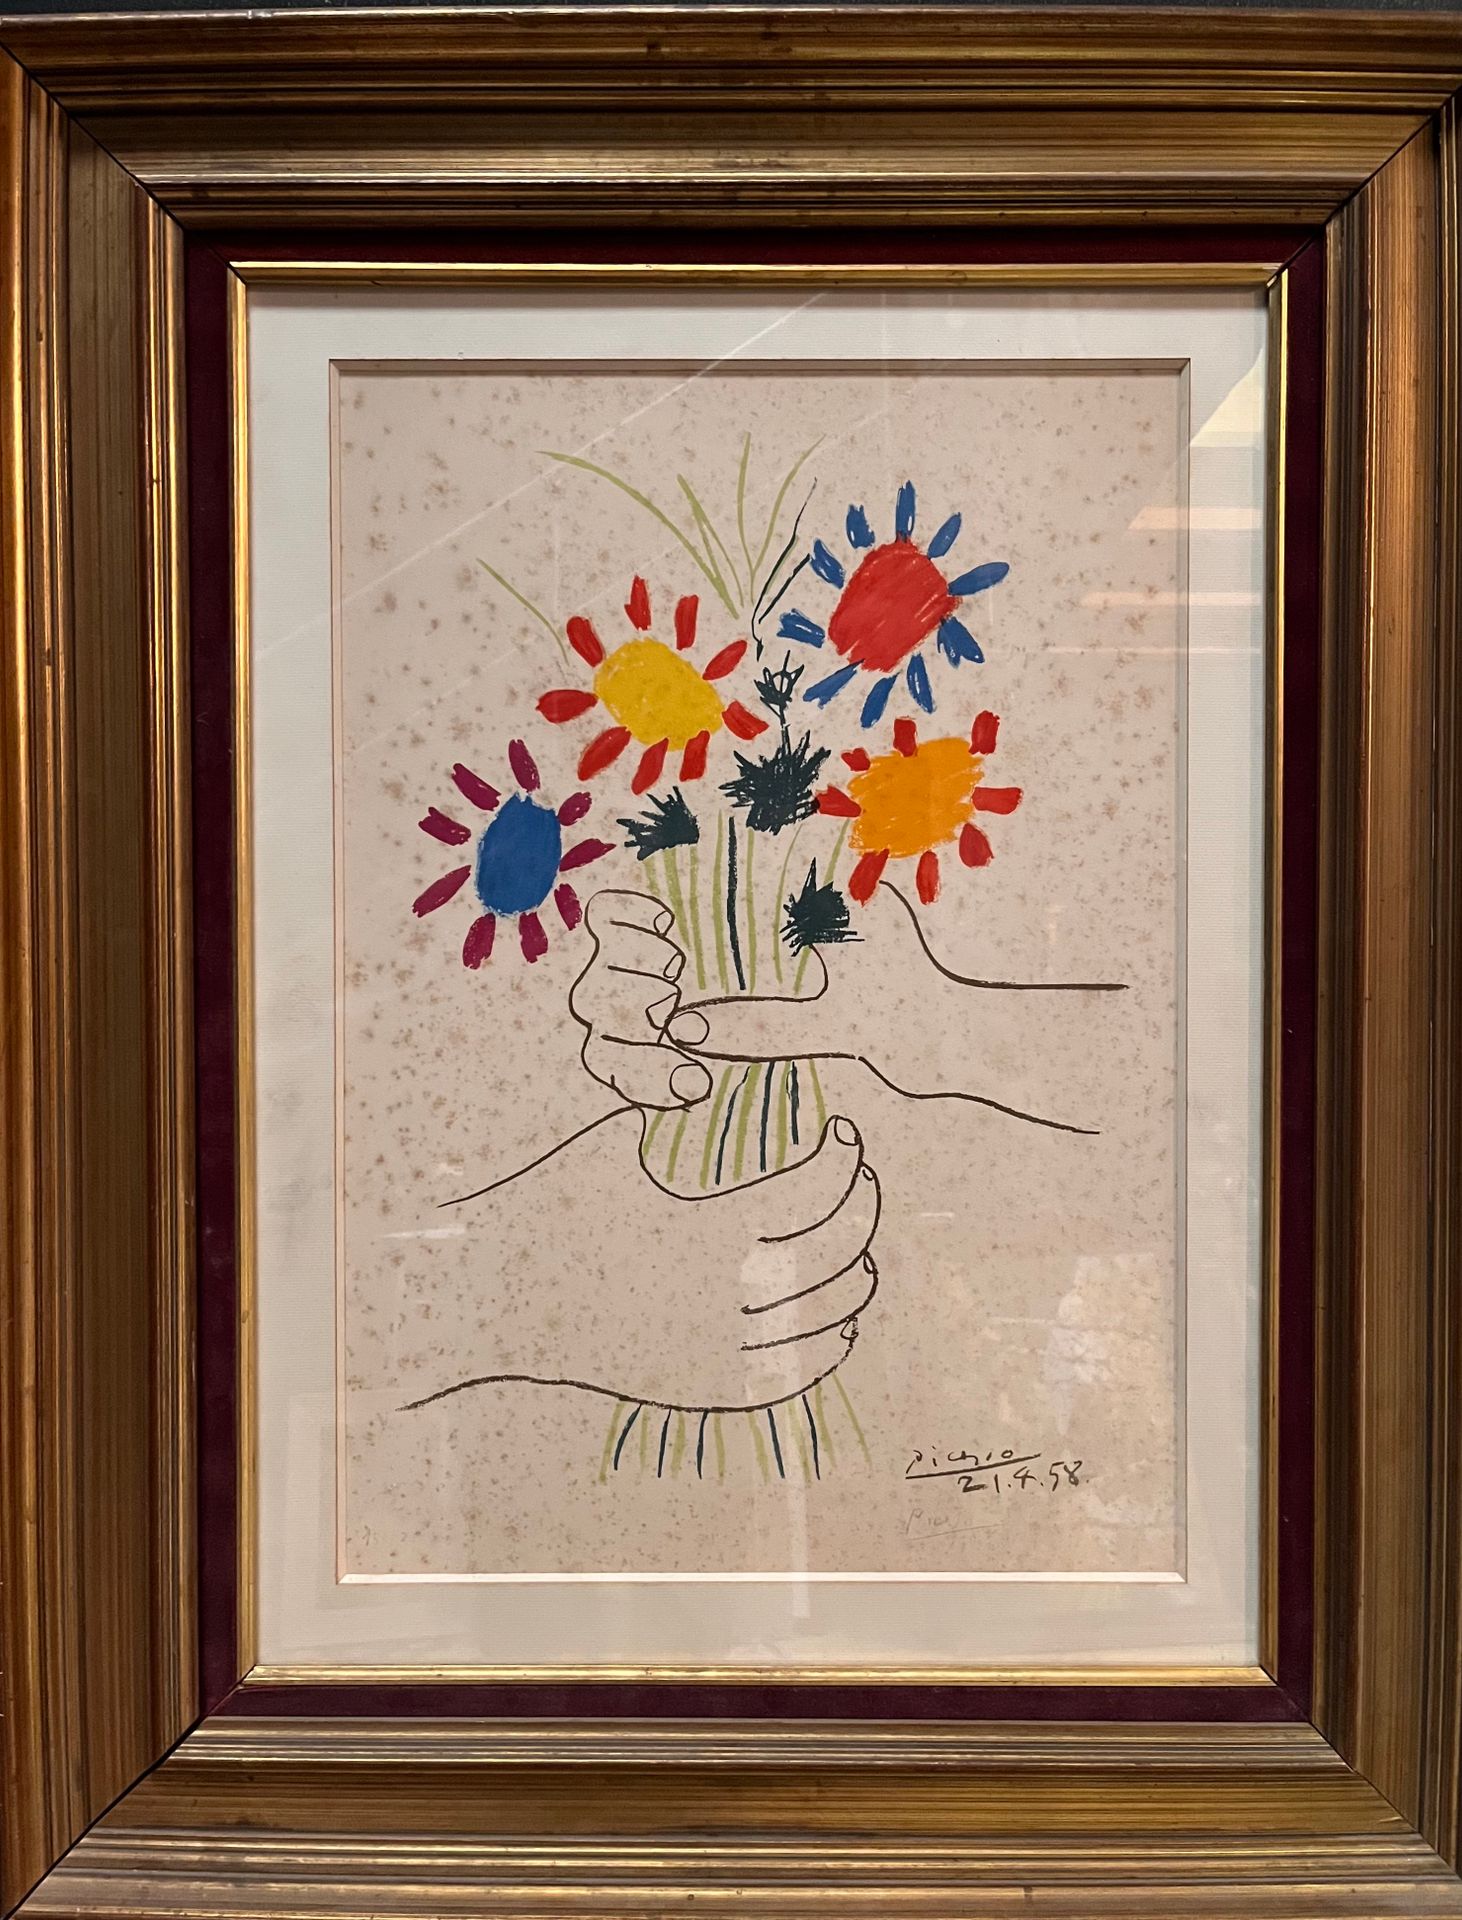 Null 仿照巴勃罗-皮卡索（1881-1973）的作品《和平》（La paix）。彩色石版画，右下方有签名和日期。尺寸：65x50厘米。